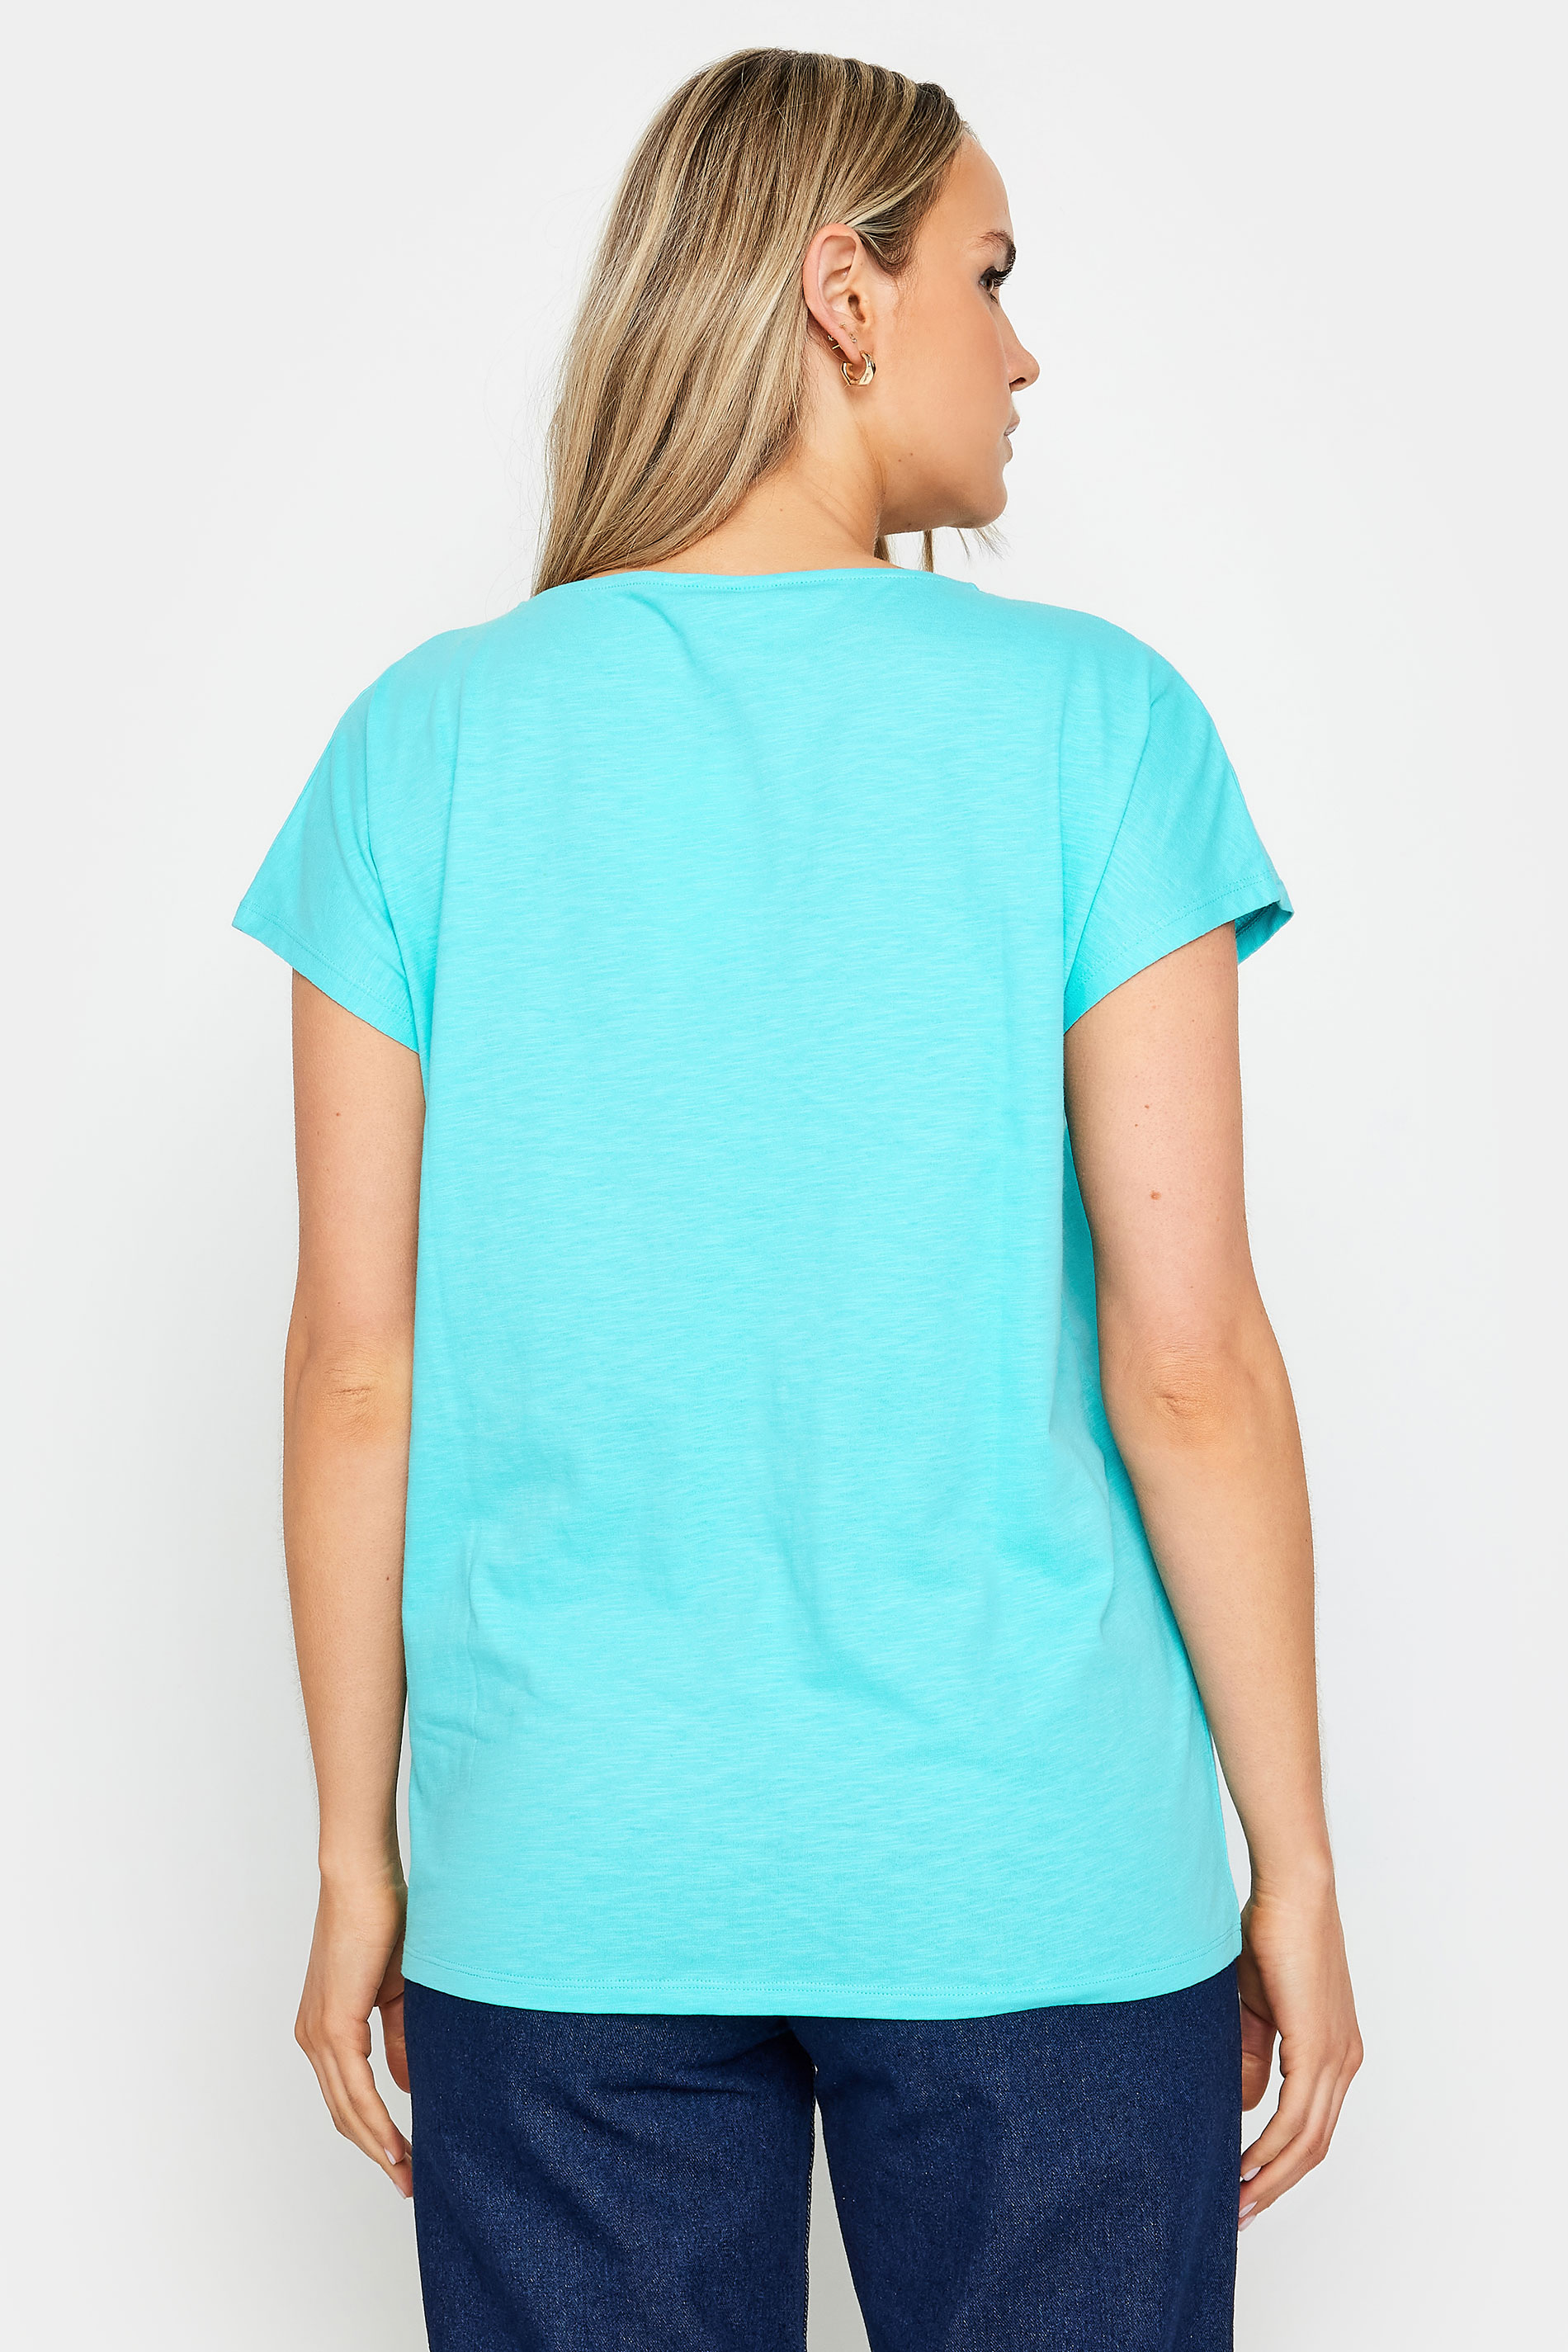 LTS Tall Womens Bright Blue Short Sleeve T-Shirt | Long Tall Sally 3